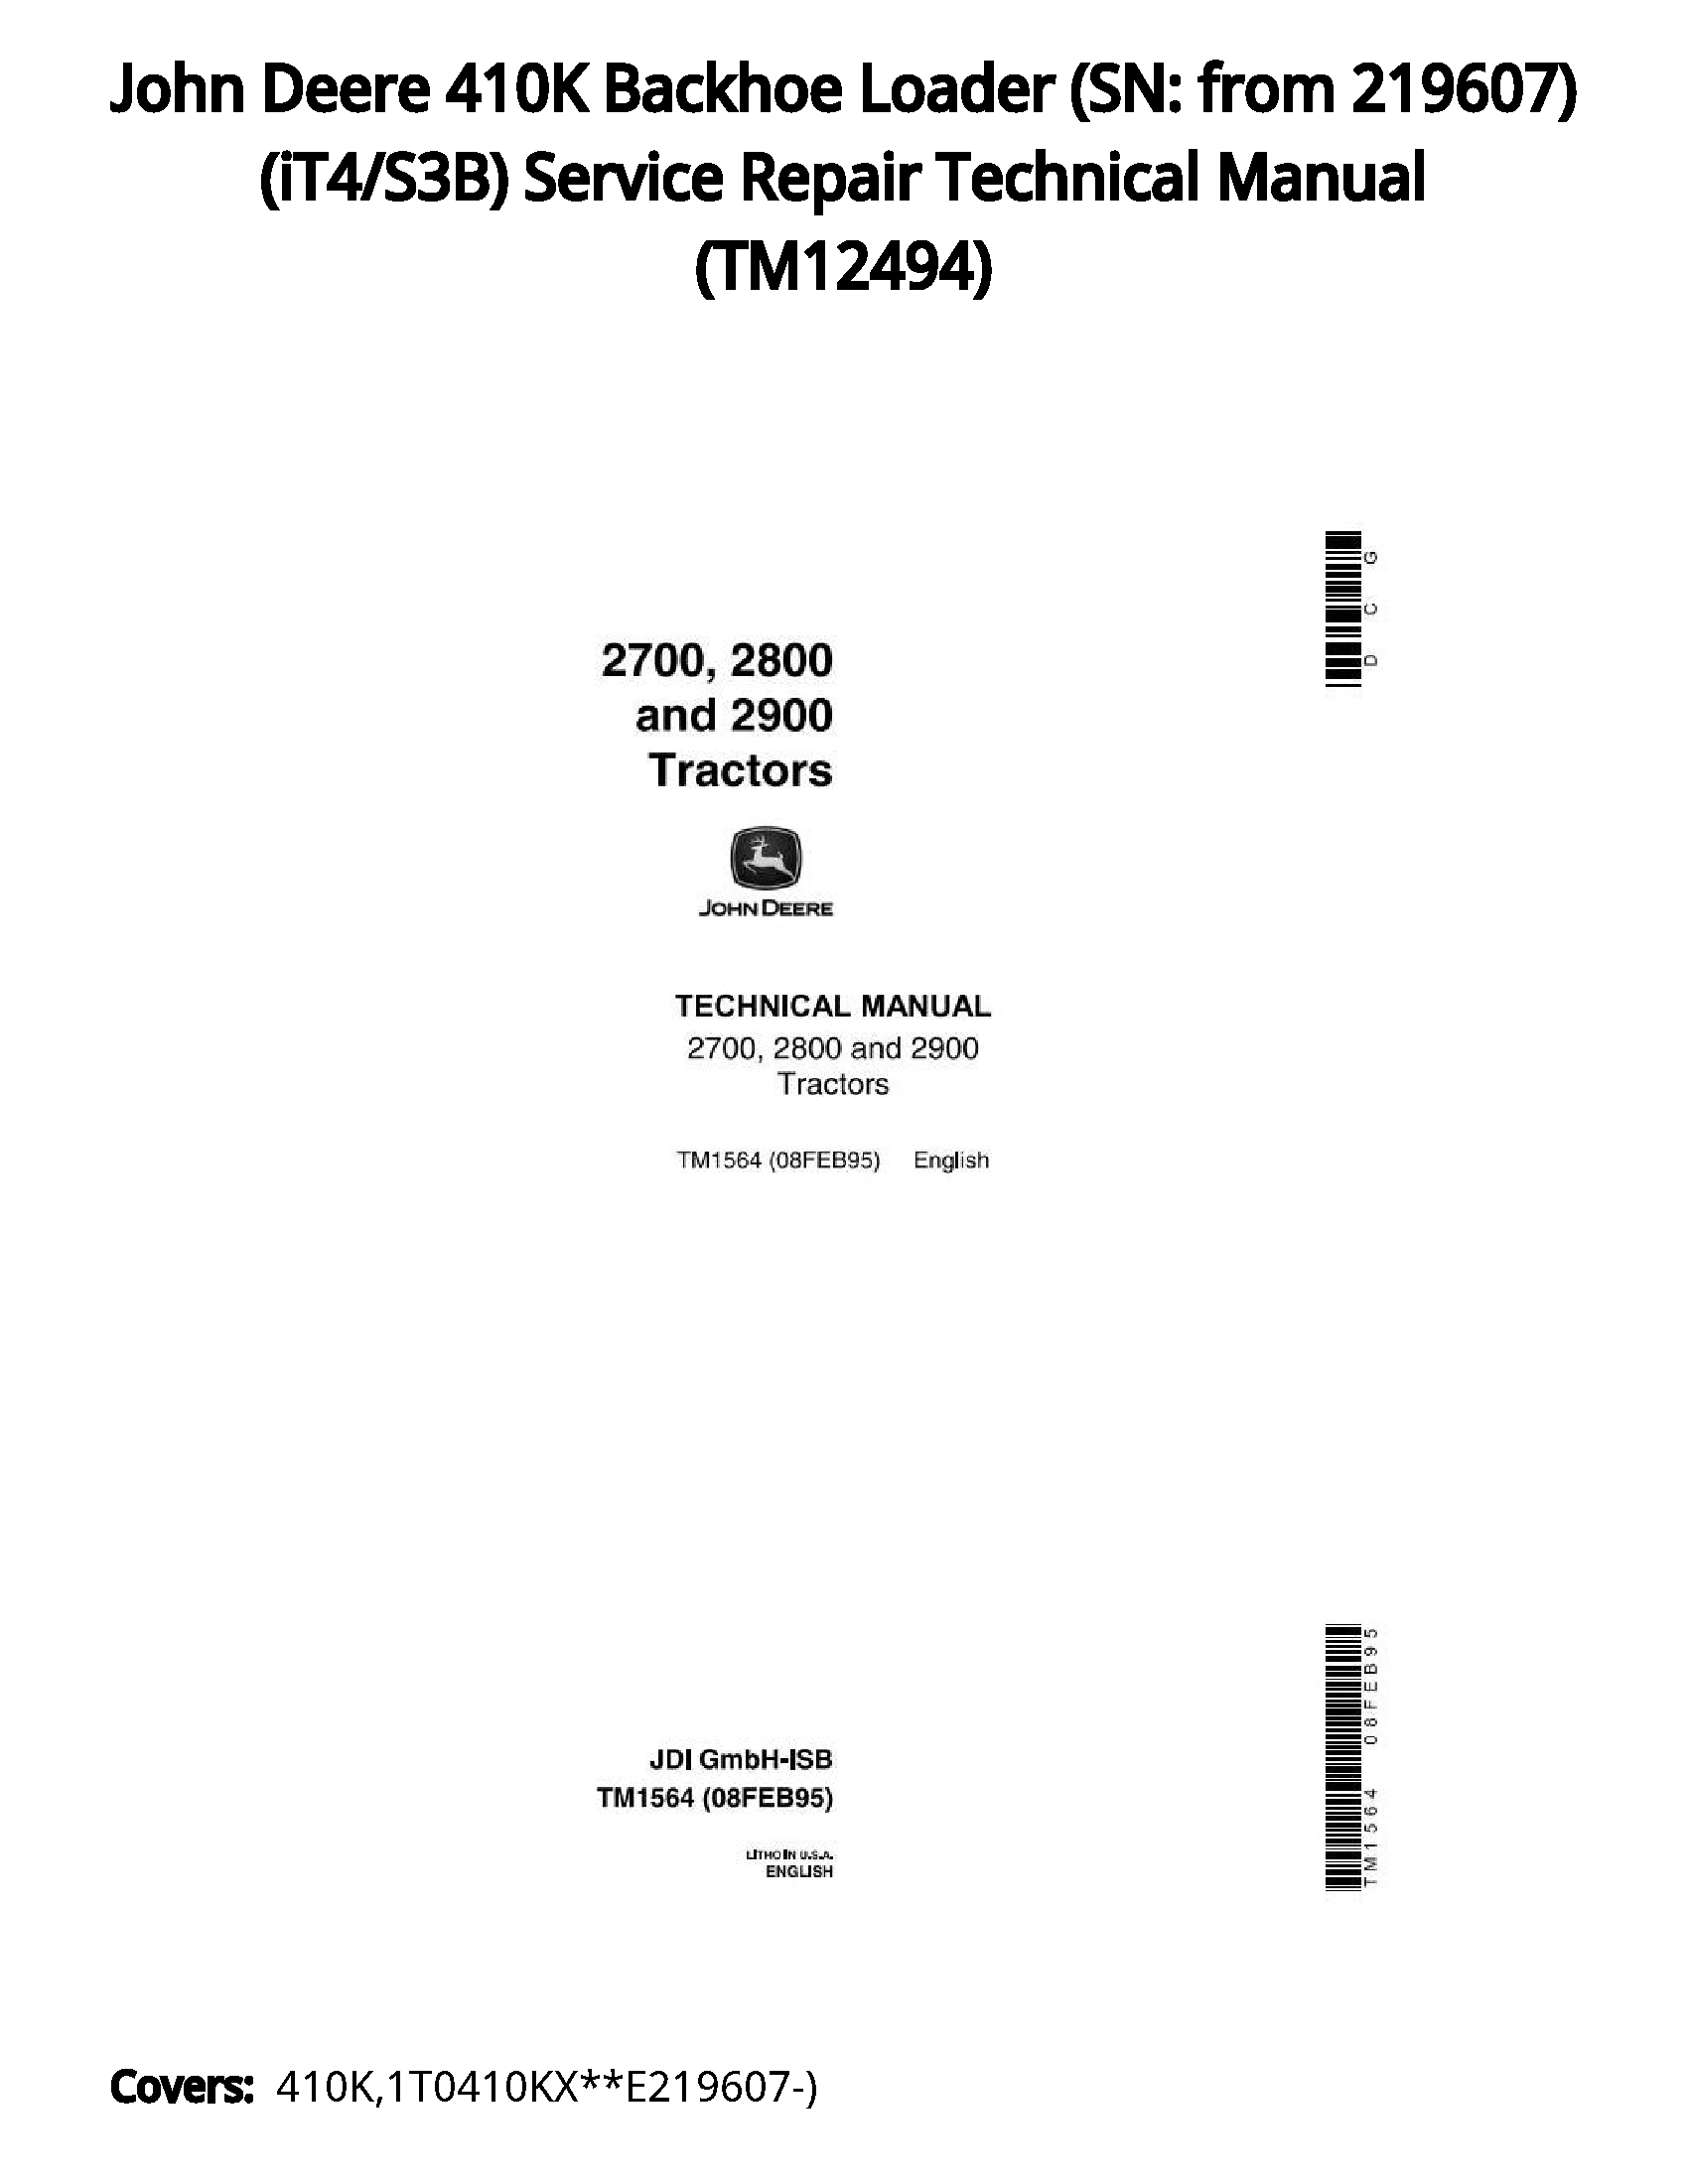 John Deere 410K Backhoe Loader (SN: from 219607) (iT4/S3B) Service Repair Technical Manual - TM12494